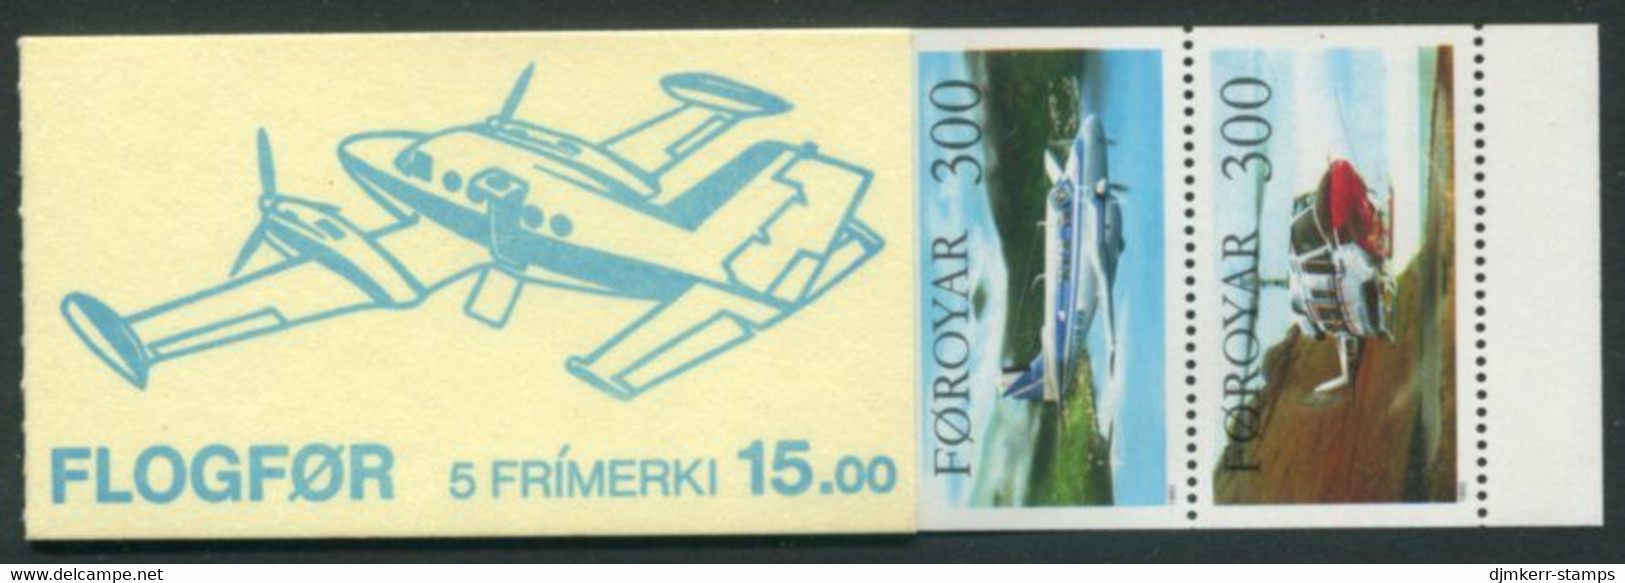 FAROE IS. 1985 Aircraft Booklet MNH / **.  Michel 125-29, MH3 - Islas Faeroes